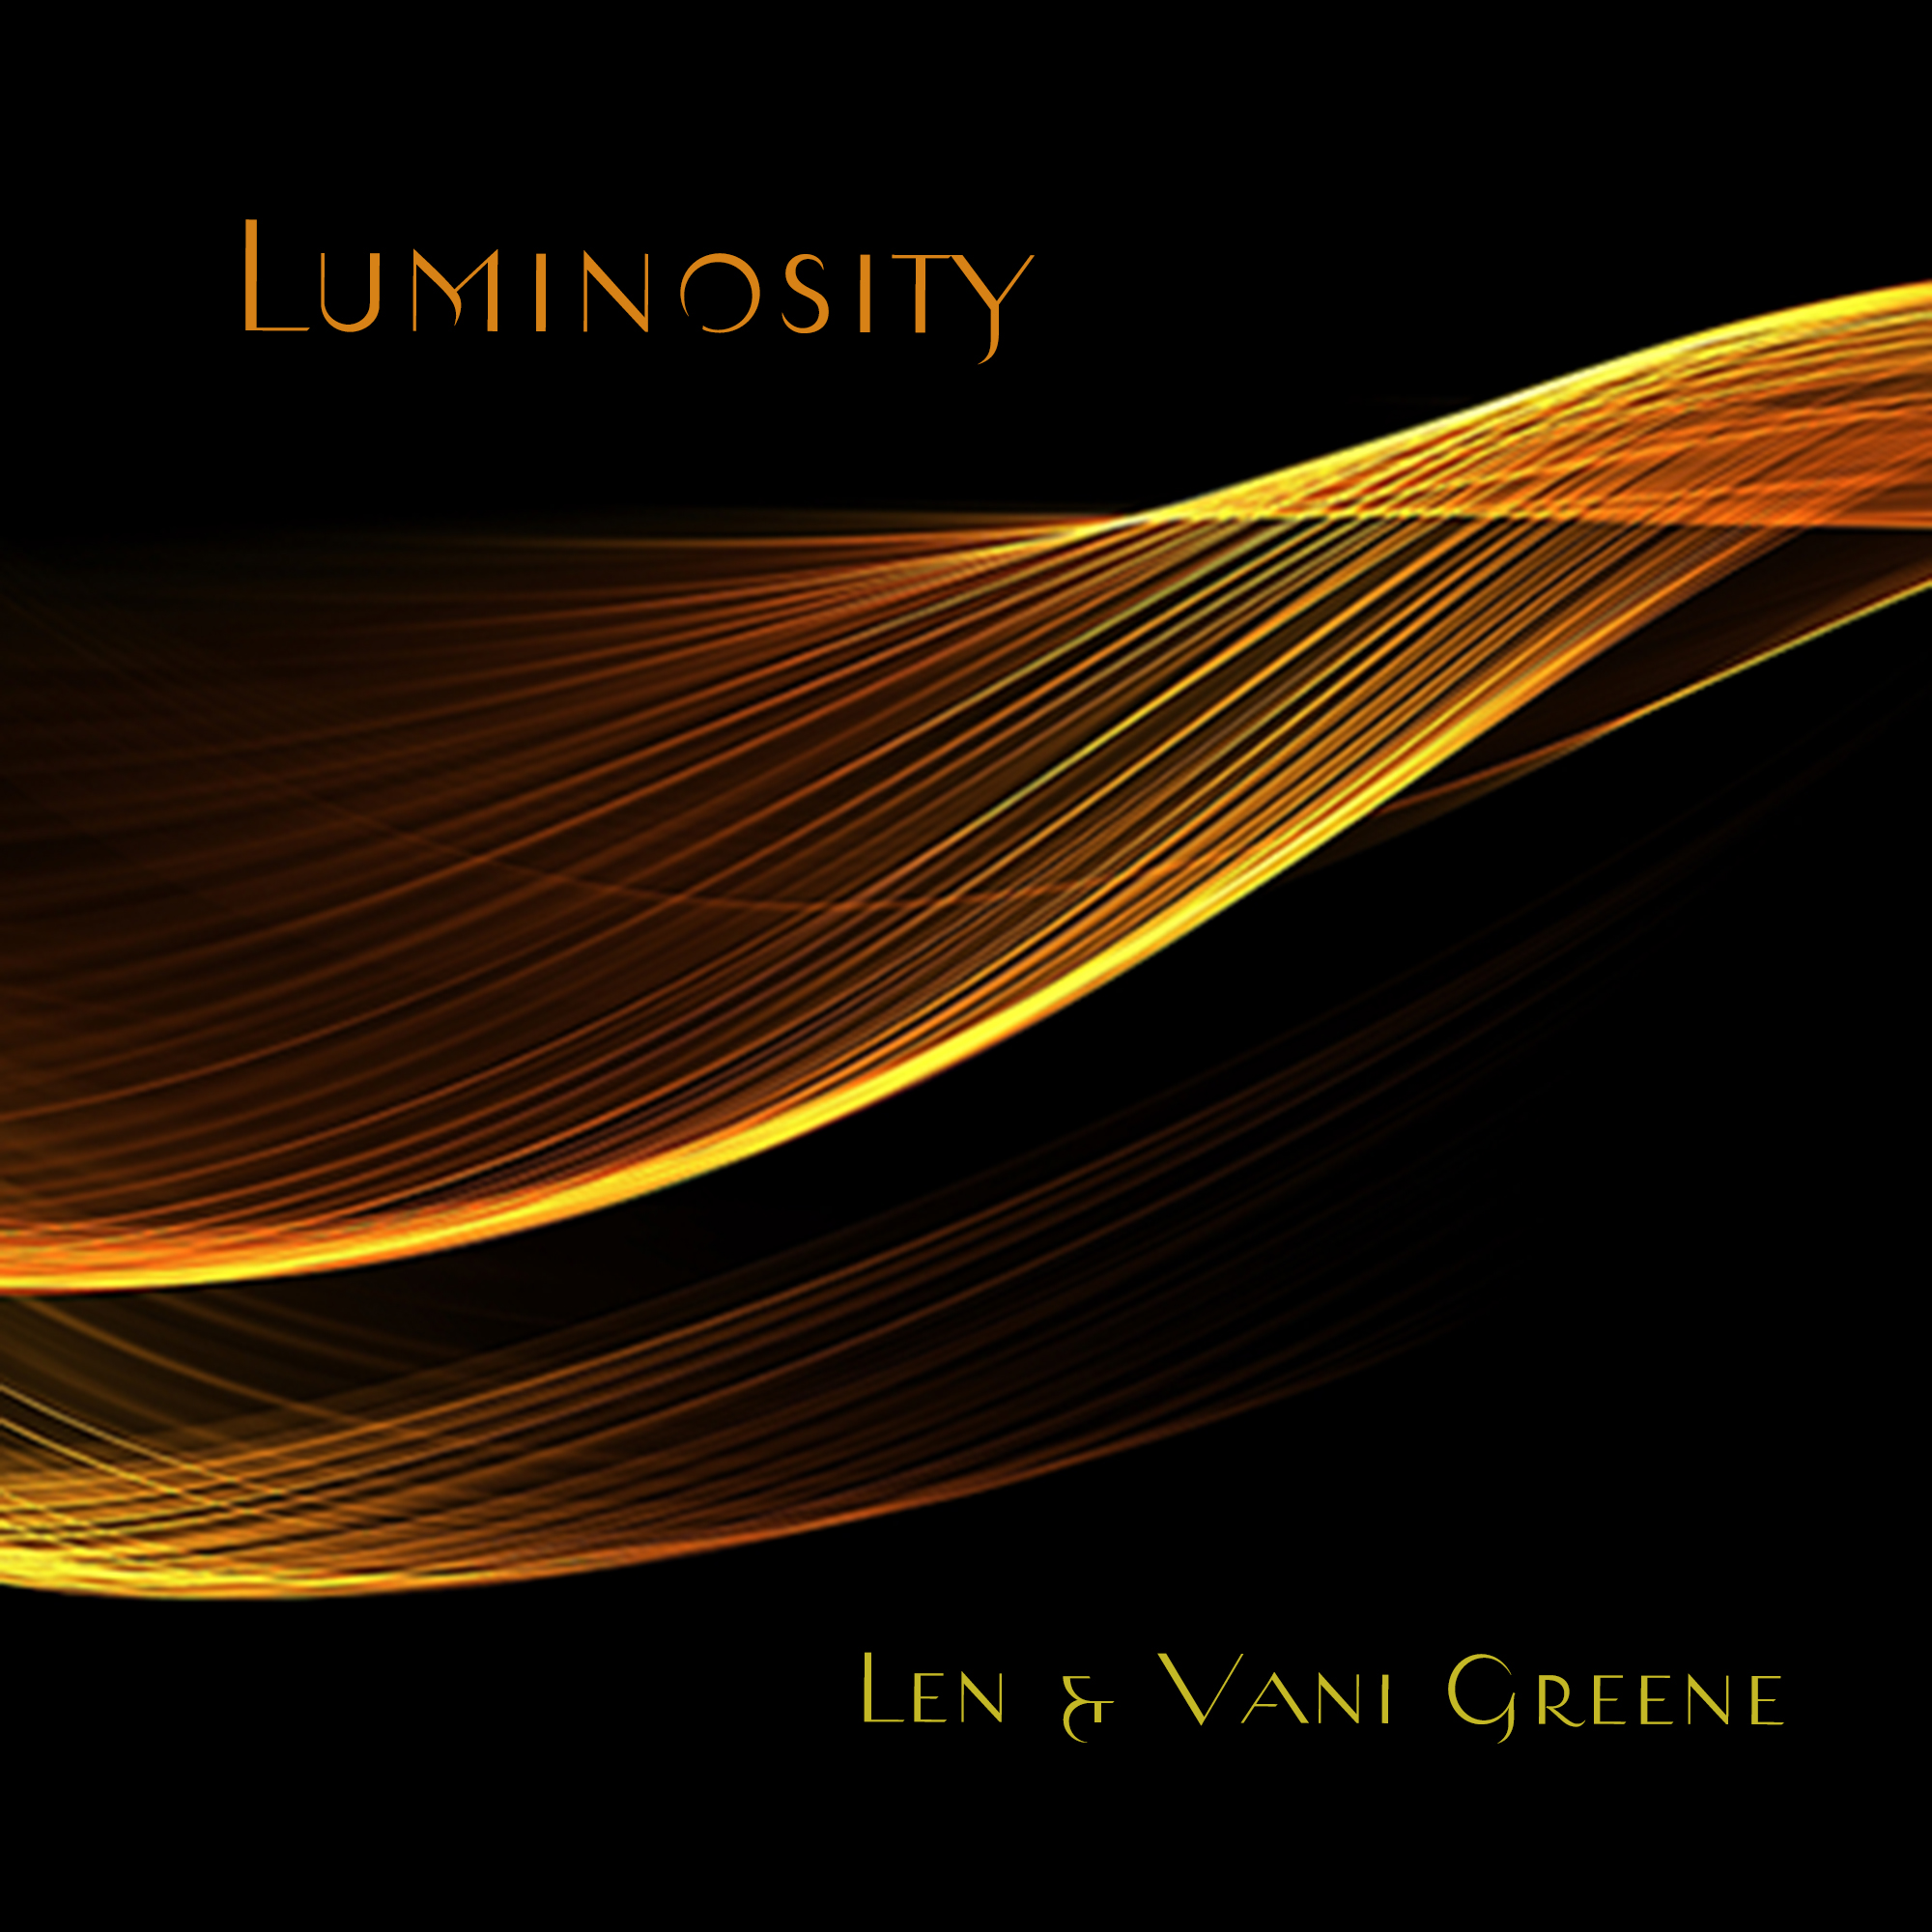 Luminosity CD by Len and Vani Greene